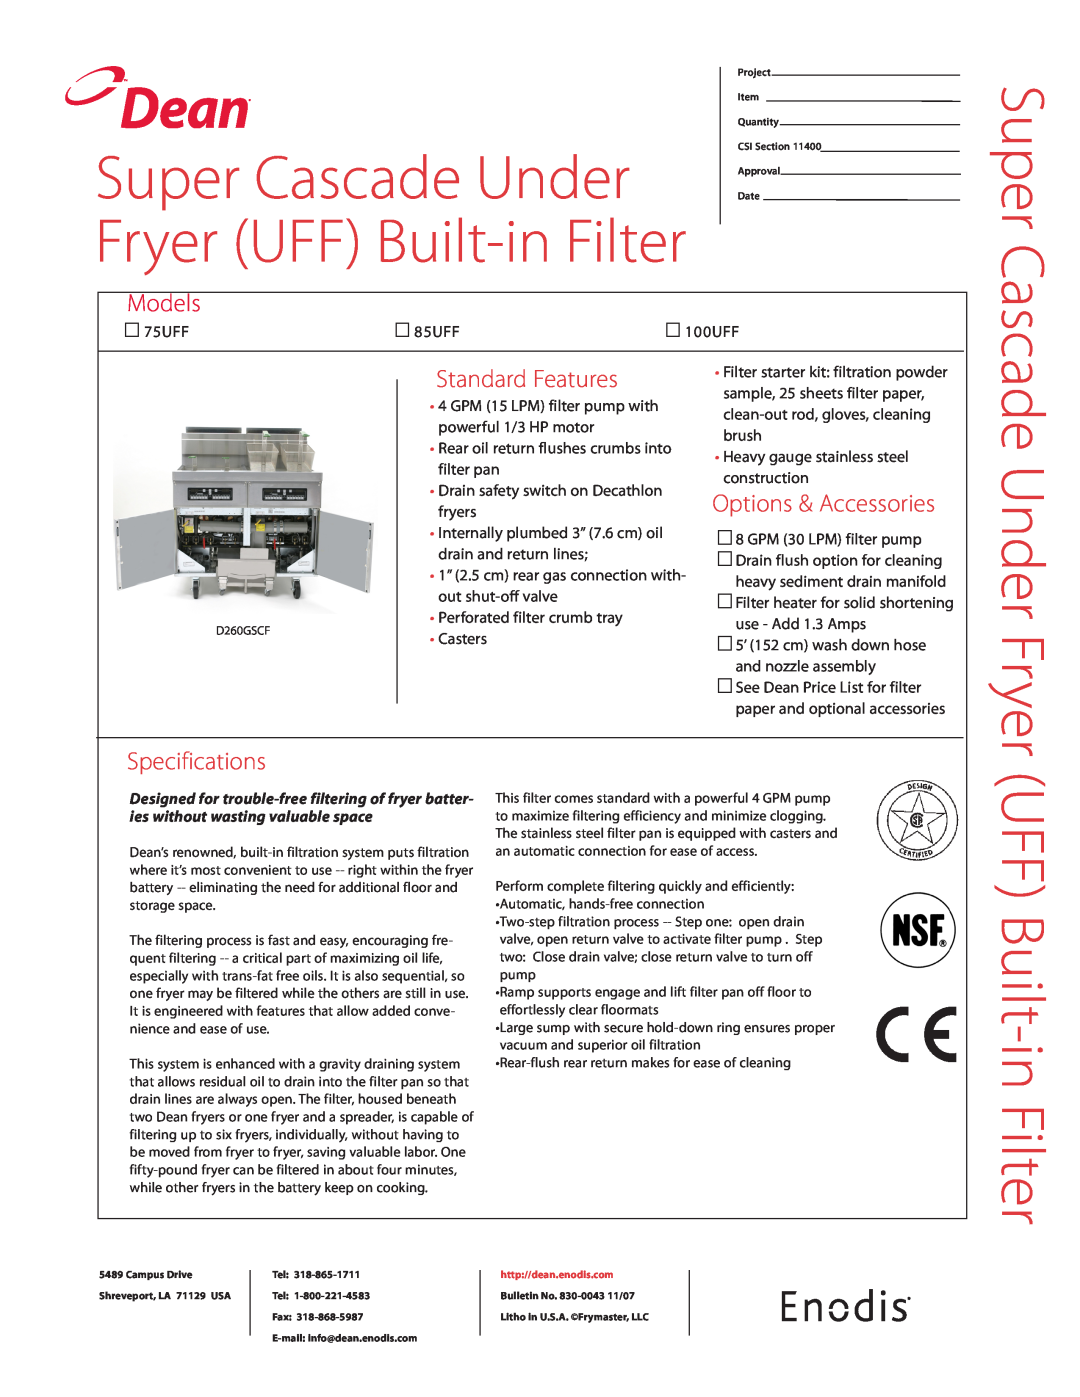 Frymaster D260GSCF specifications Dean, Super Cascade Under Fryer UFF Built-in Filter, Models, Standard Features 